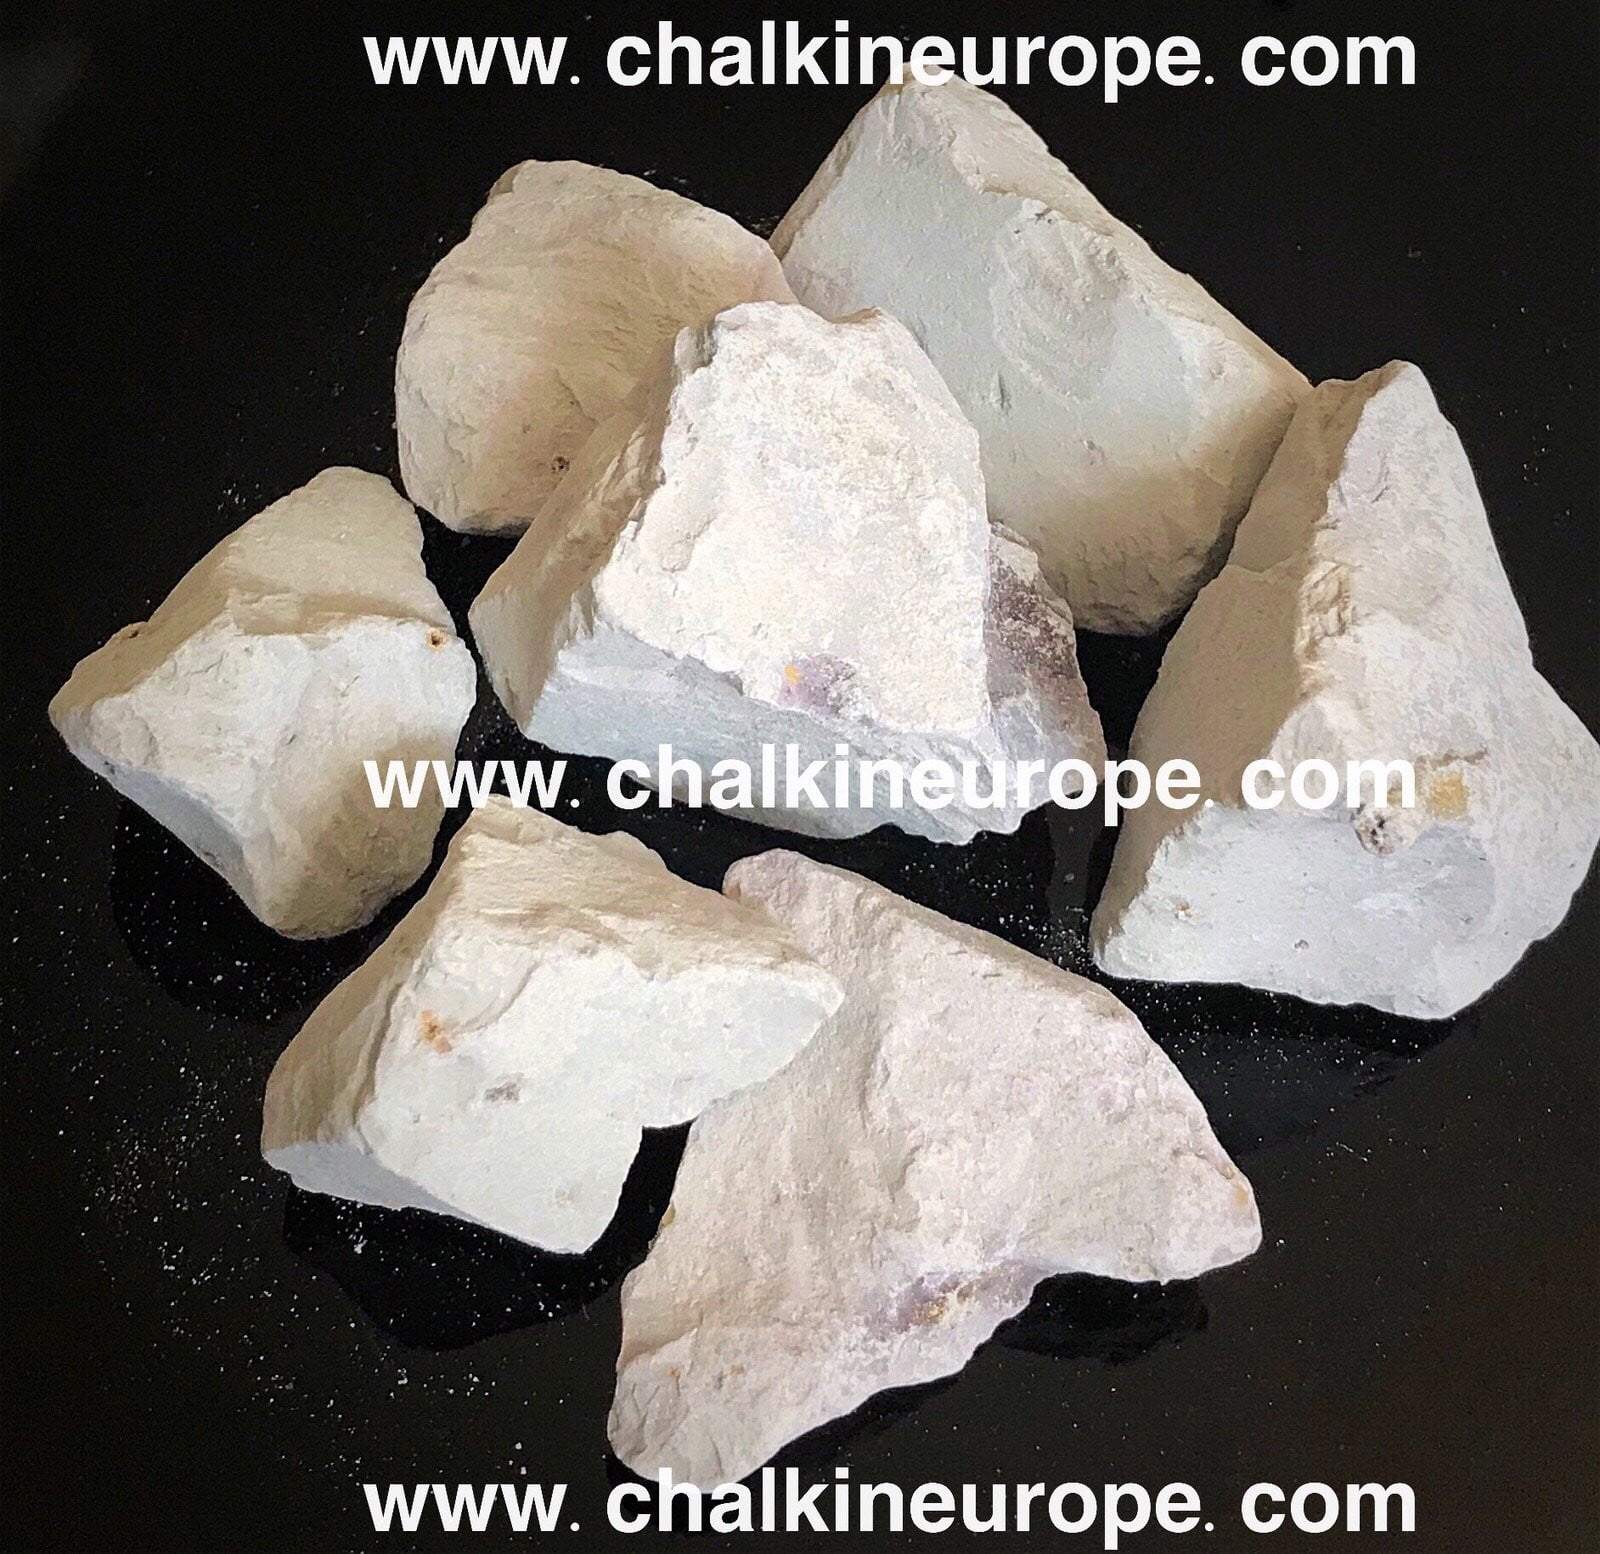 نصف محمص ناكومات الطين - Chalkineurope